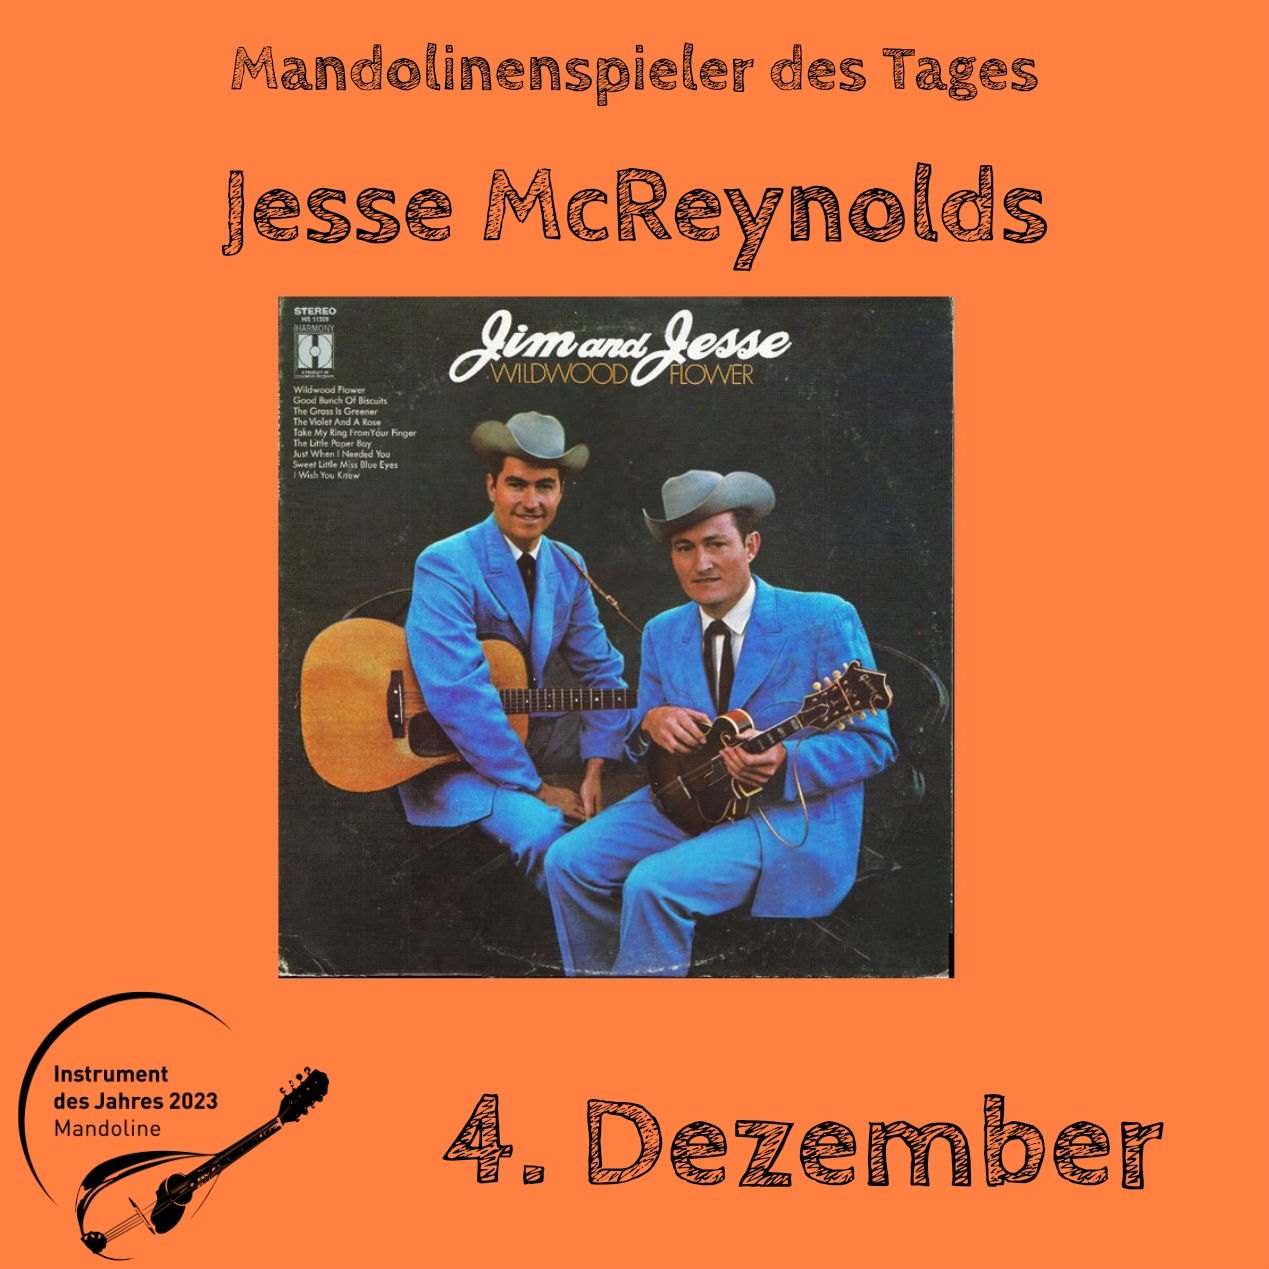 4. Dezember - Jesse McReynolds Instrument des Jahres 2023 Mandolinenspieler Mandolinenspielerin des Tages